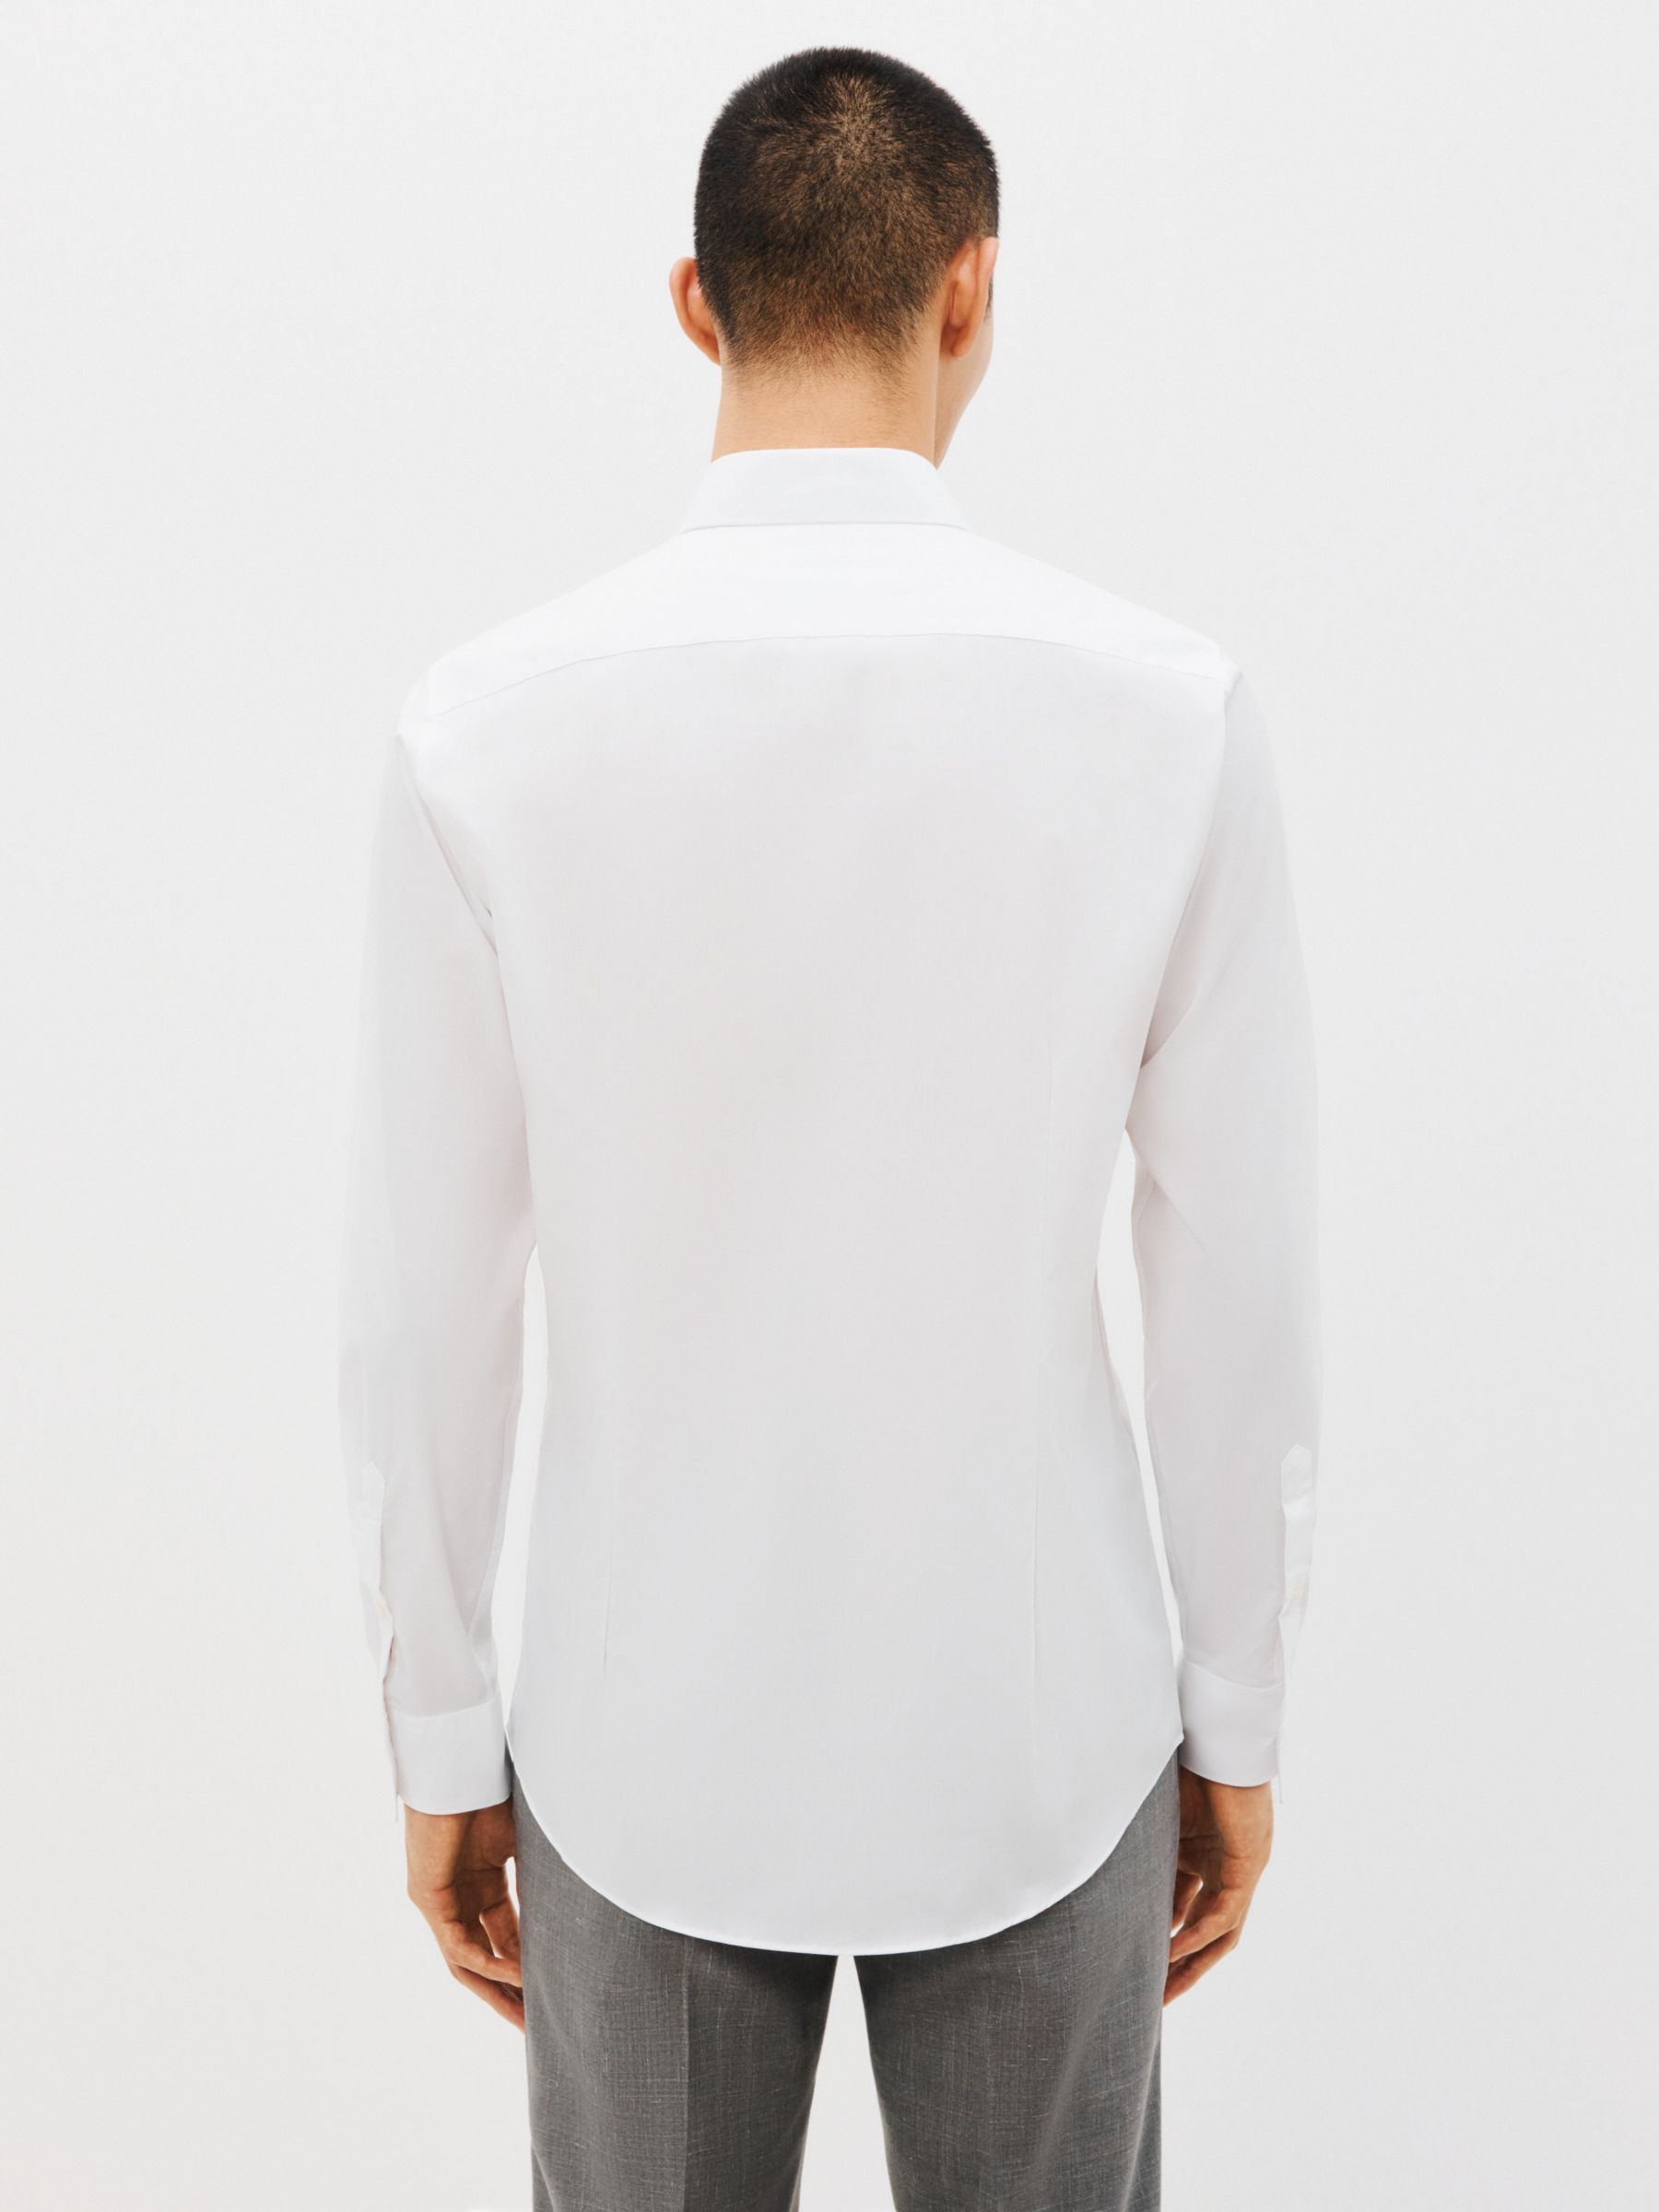 Kin Stretch Poplin Slim Fit Shirt, White, 14.5R